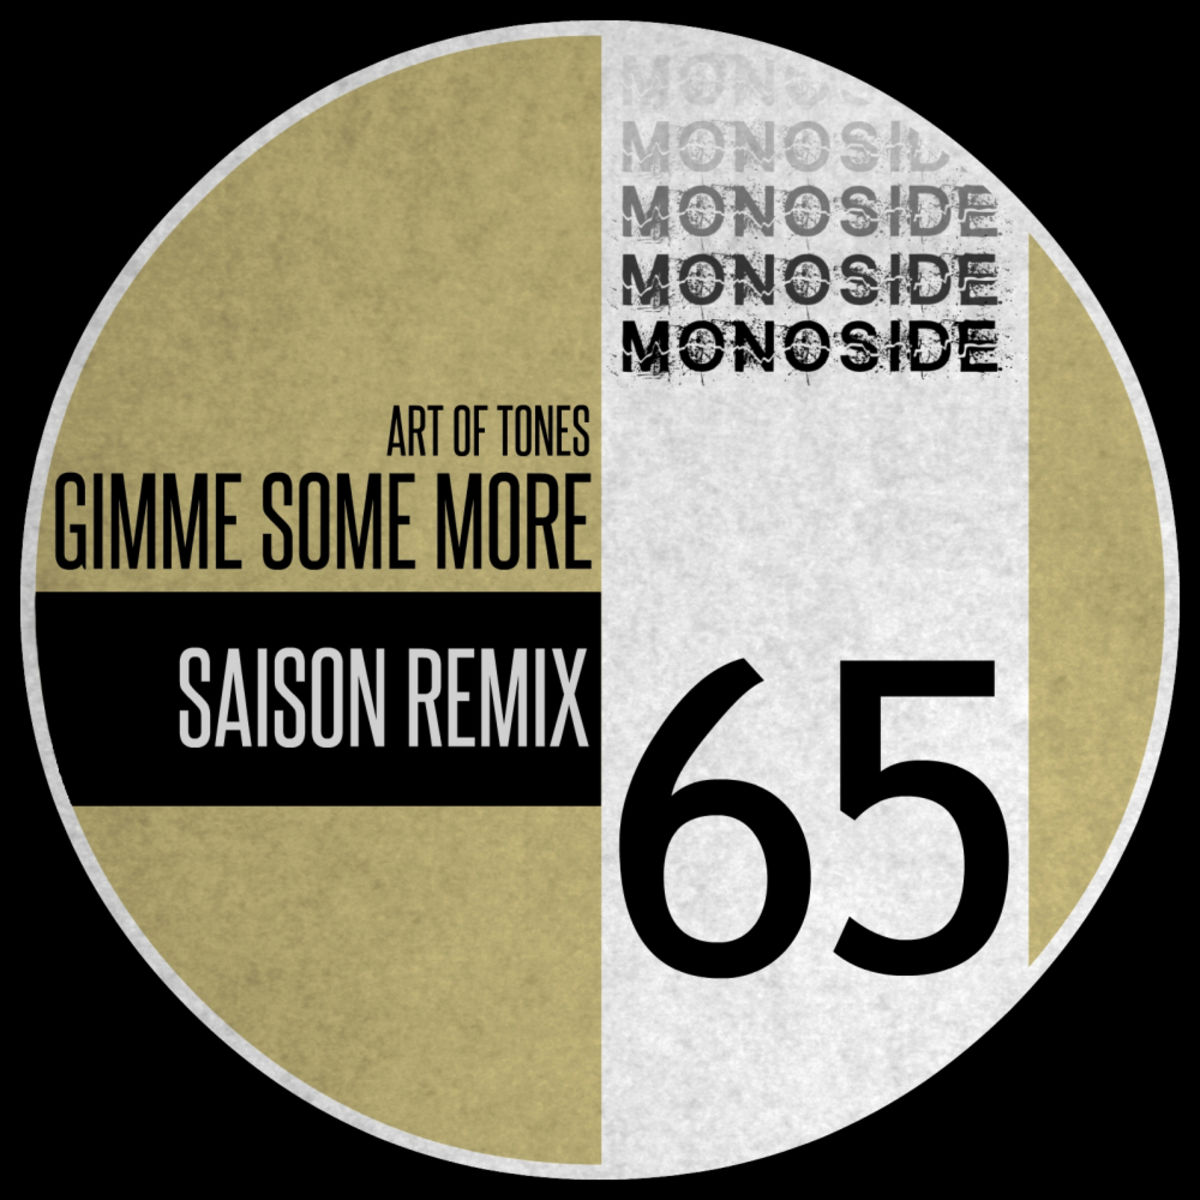 Art Of Tones - Gimme Some More (Saison Remix) / MONOSIDE